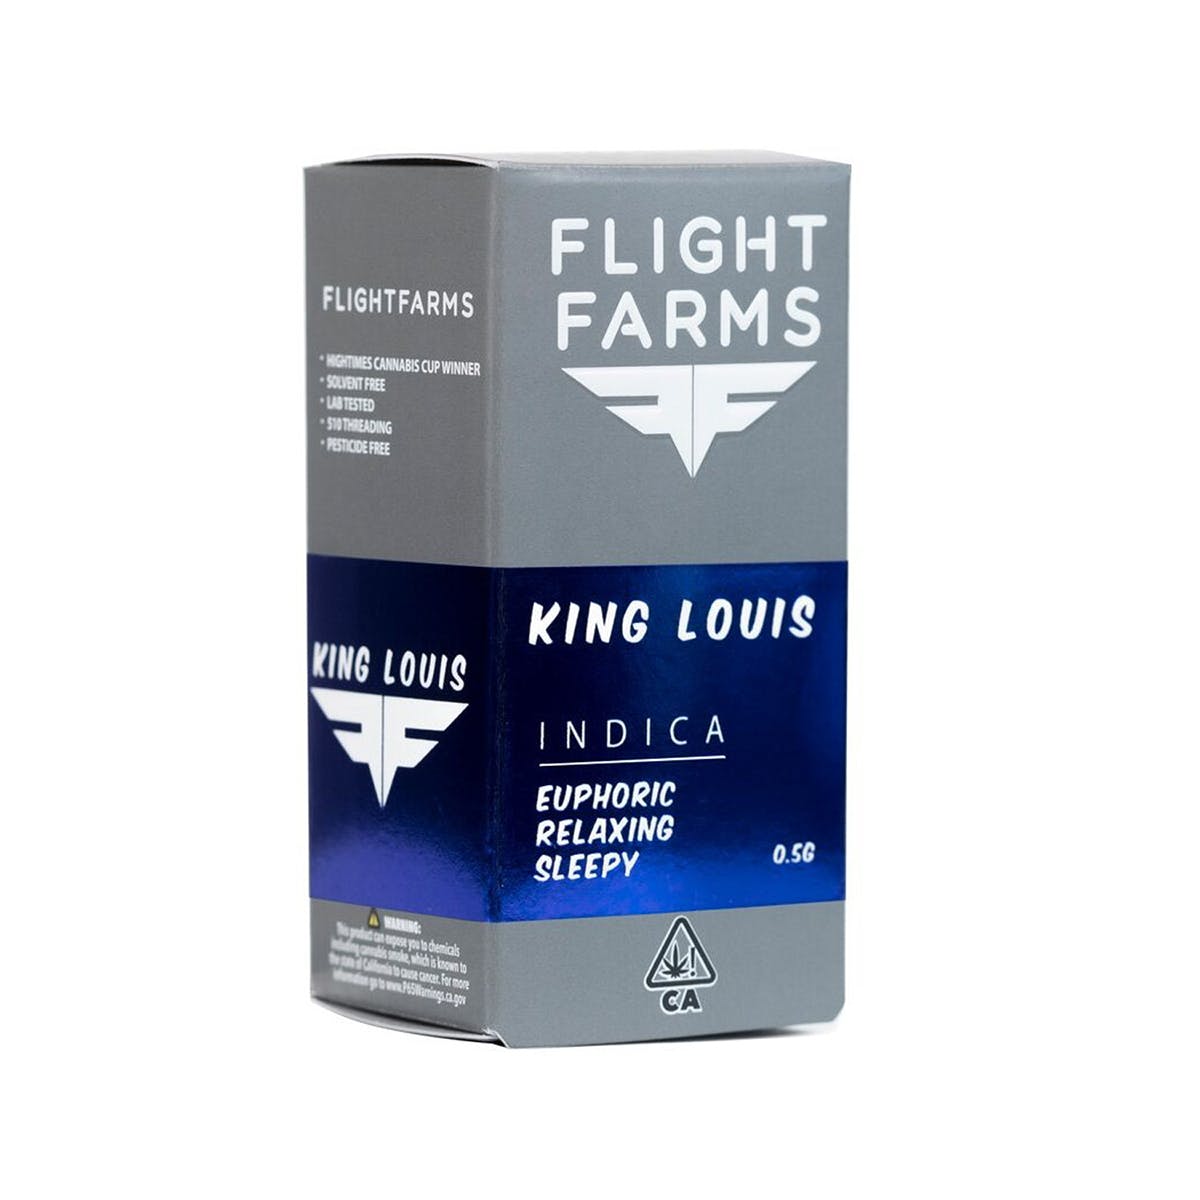 FLIGHT FARMS F9 Cartridge - King Louis XIII 500mg